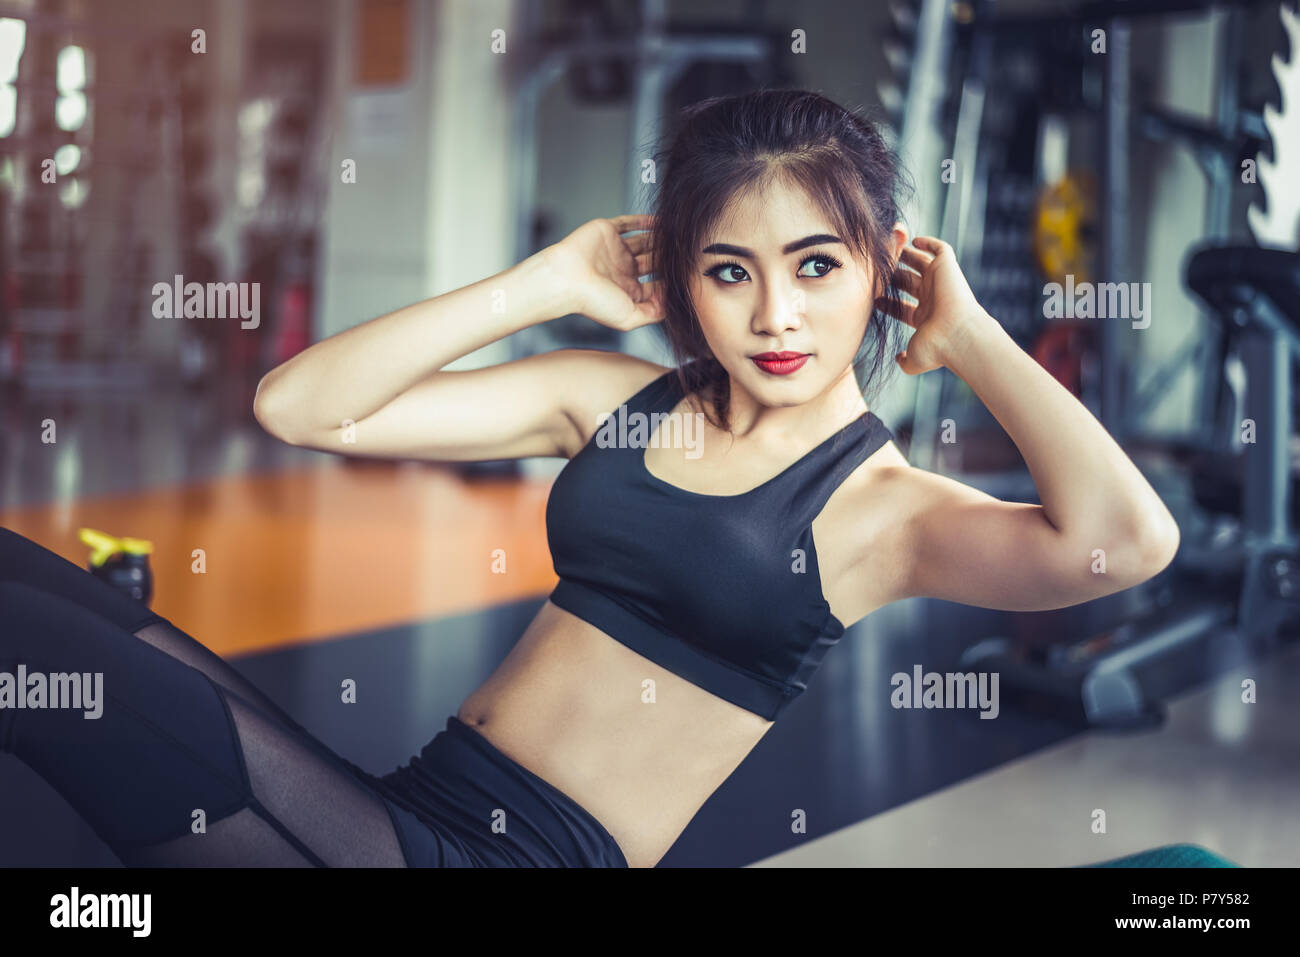 Fitness girl outdoors workout. Stock Photo by ©nikkolia 160489568